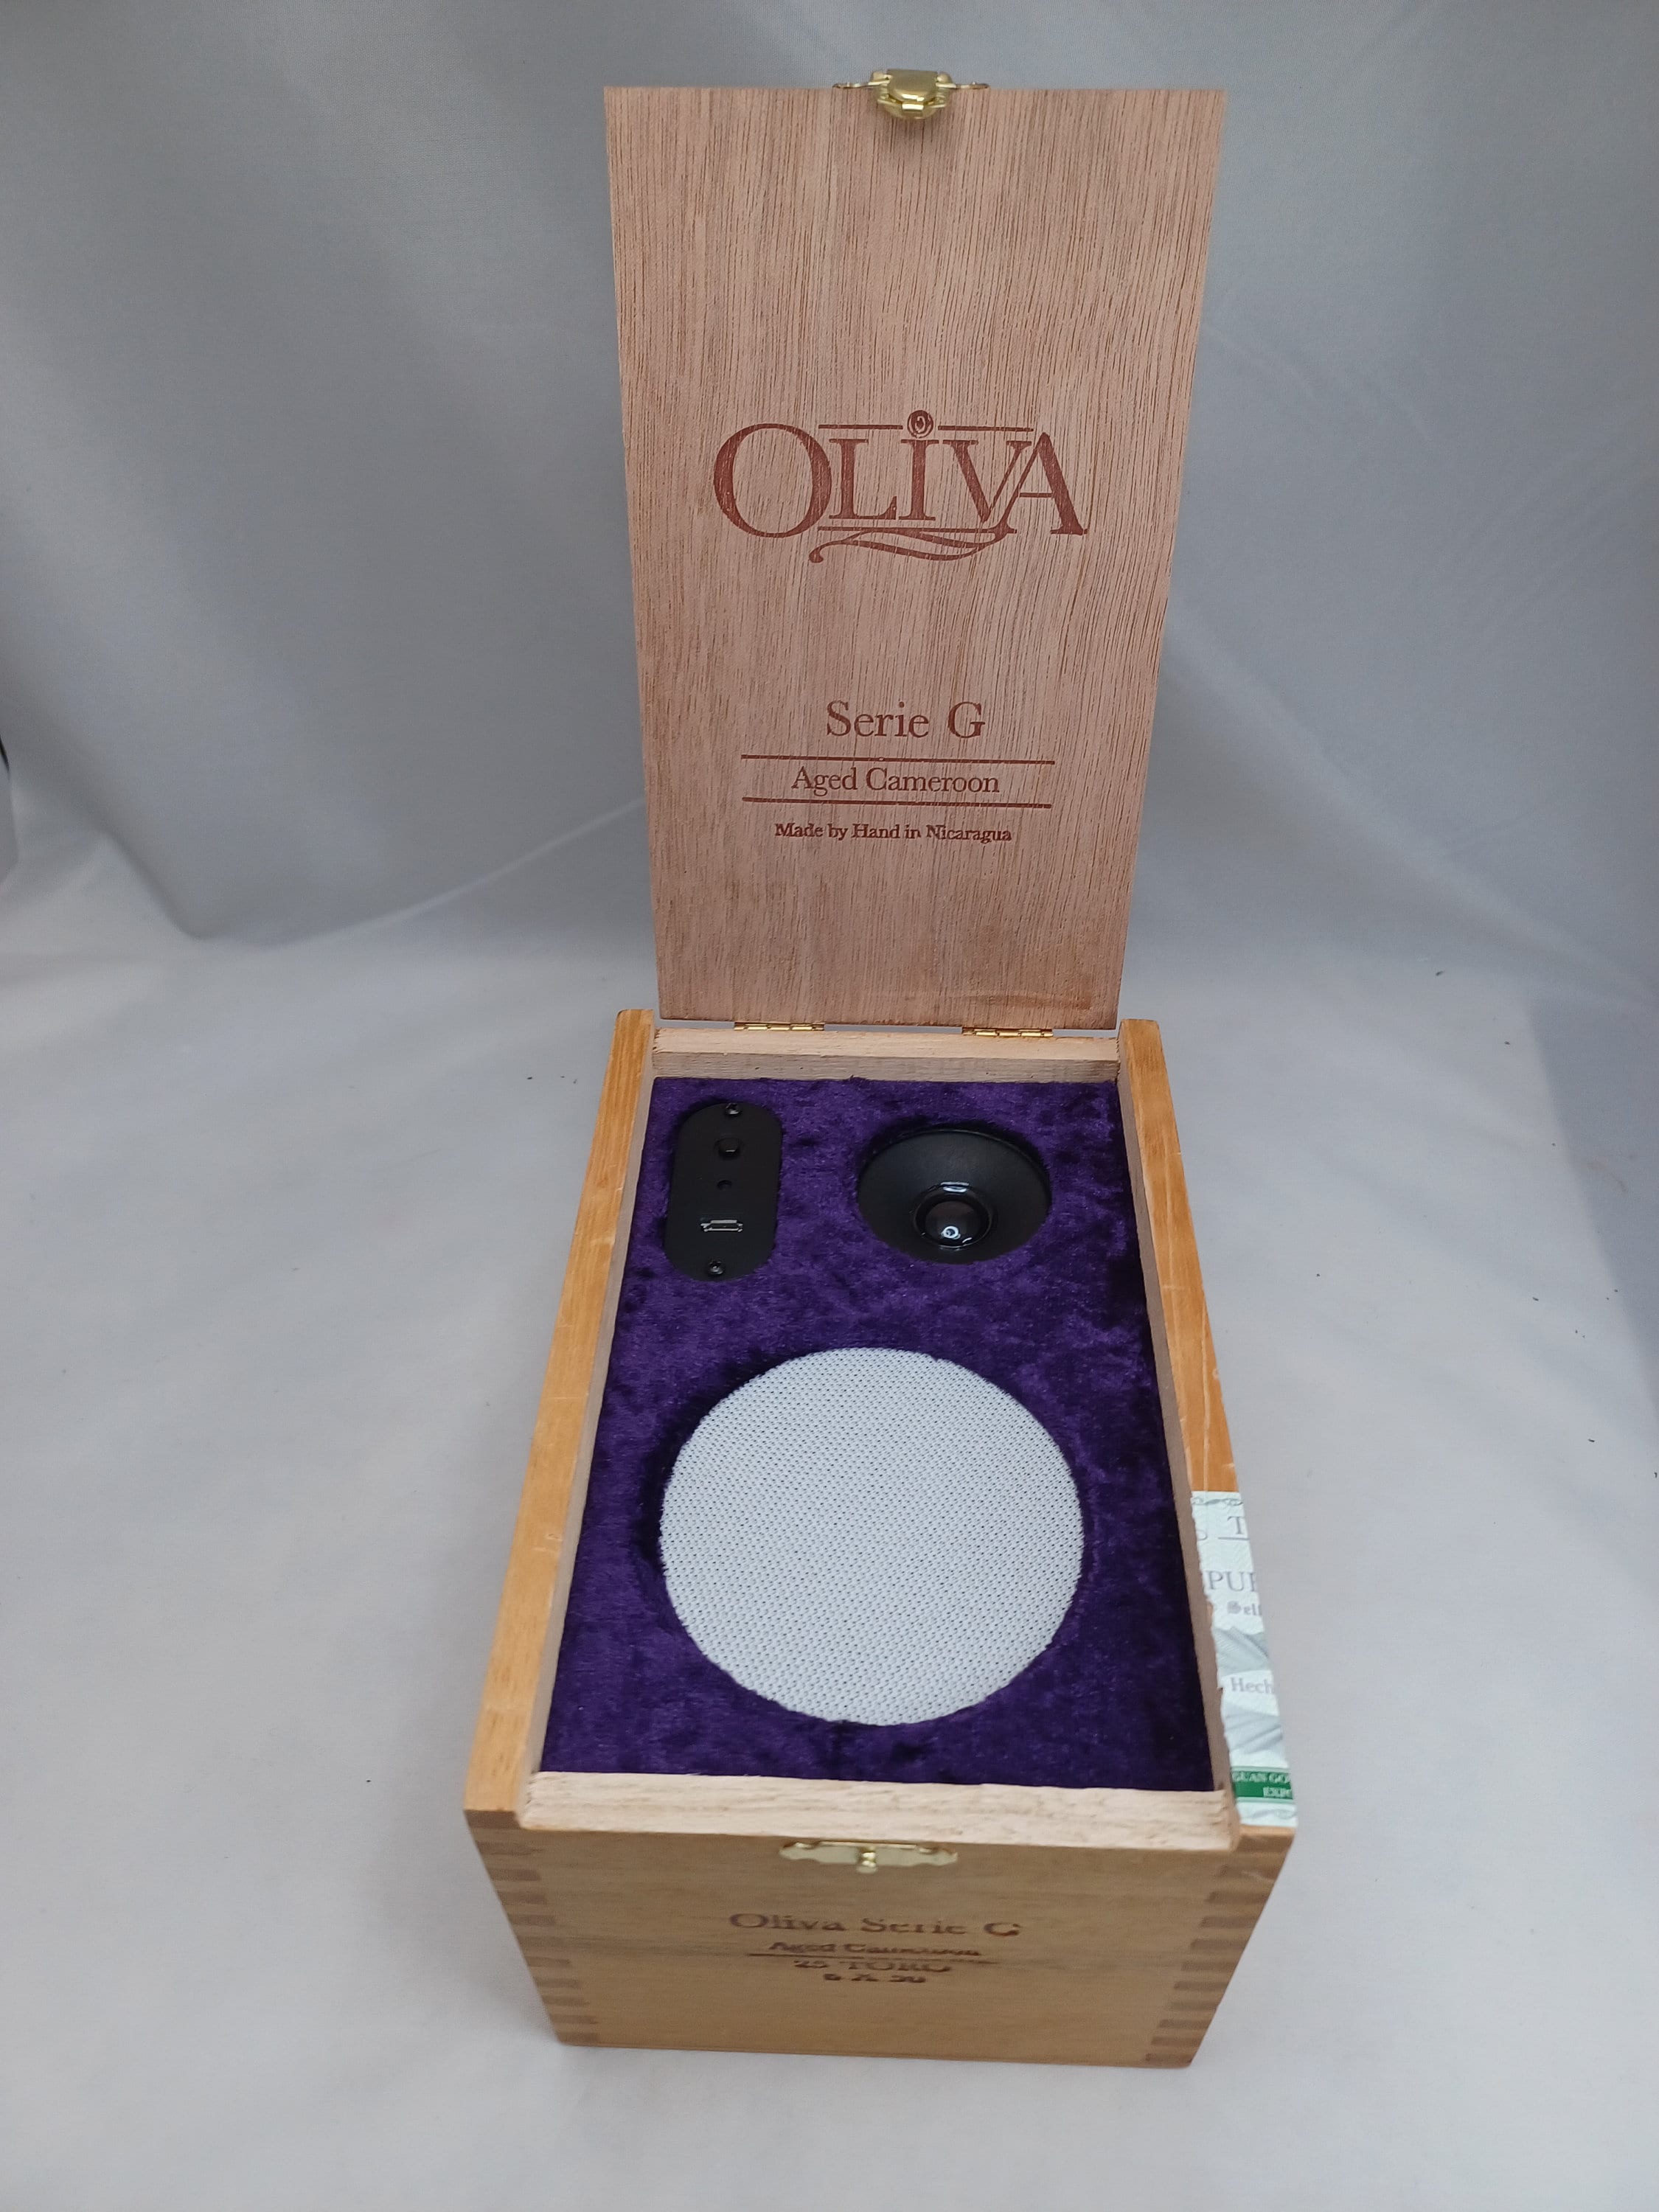 Oliva Cigar Family Five Generations Orion Maduro Box Case Wood ~~~ ESTATE